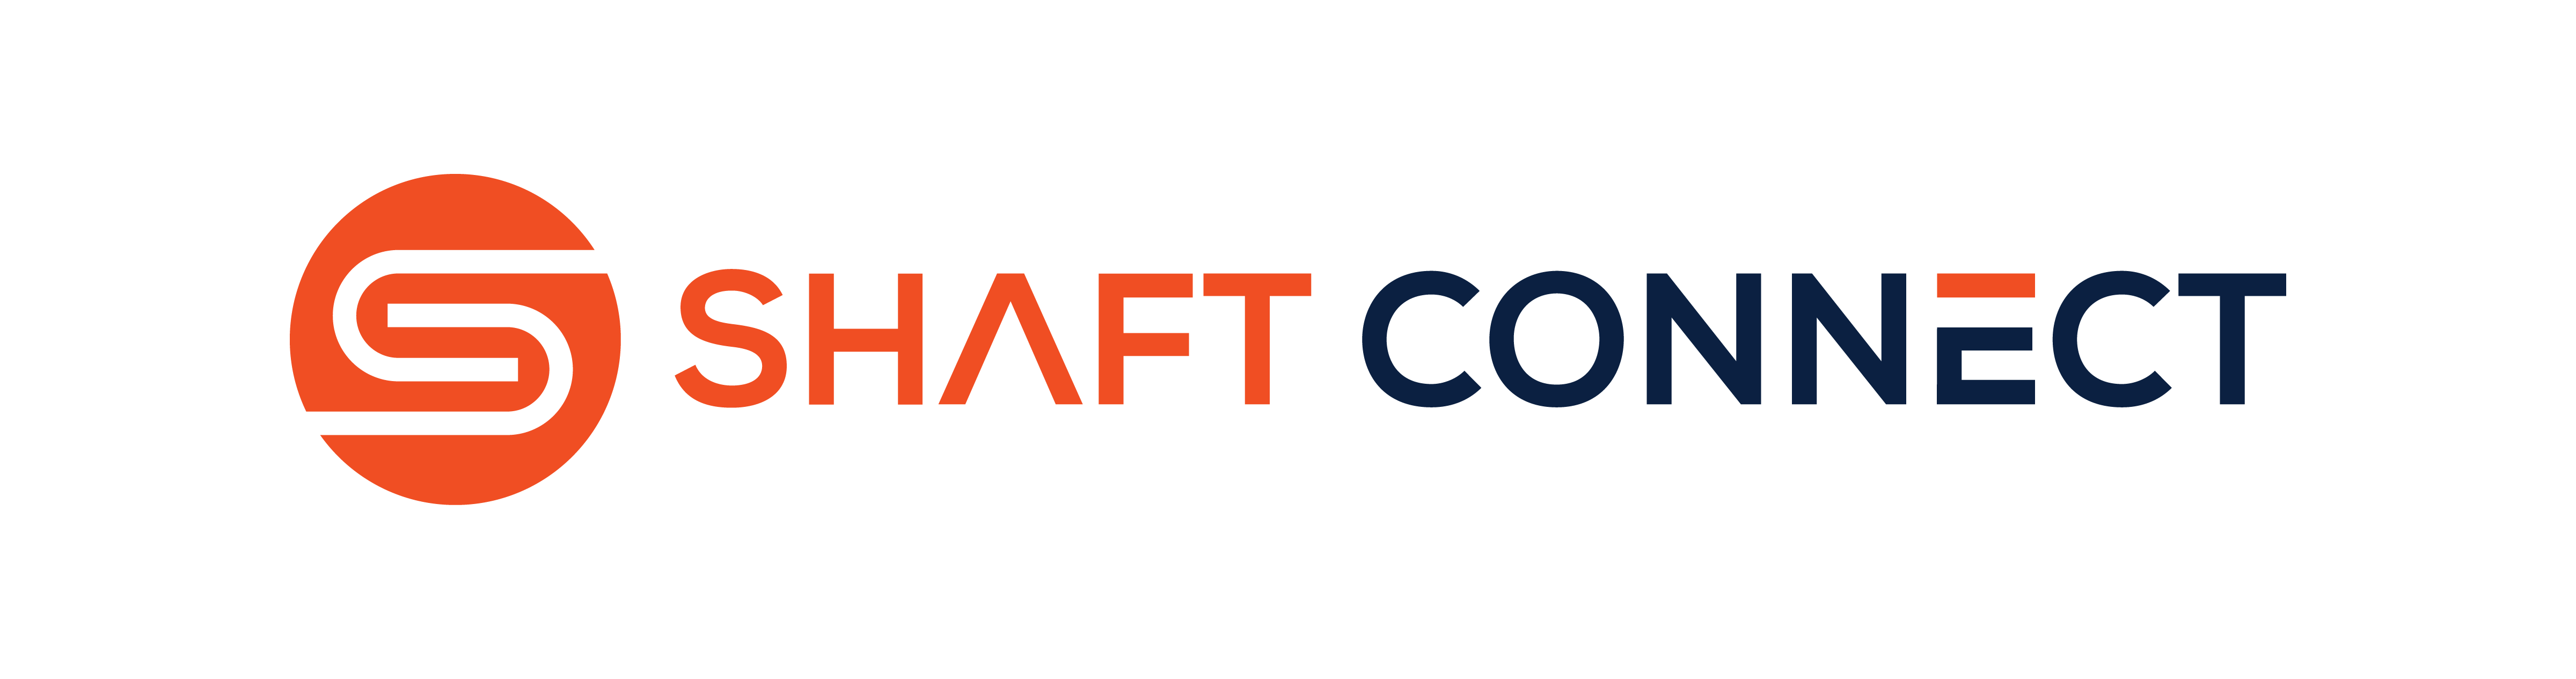 Shaft Connect Logo